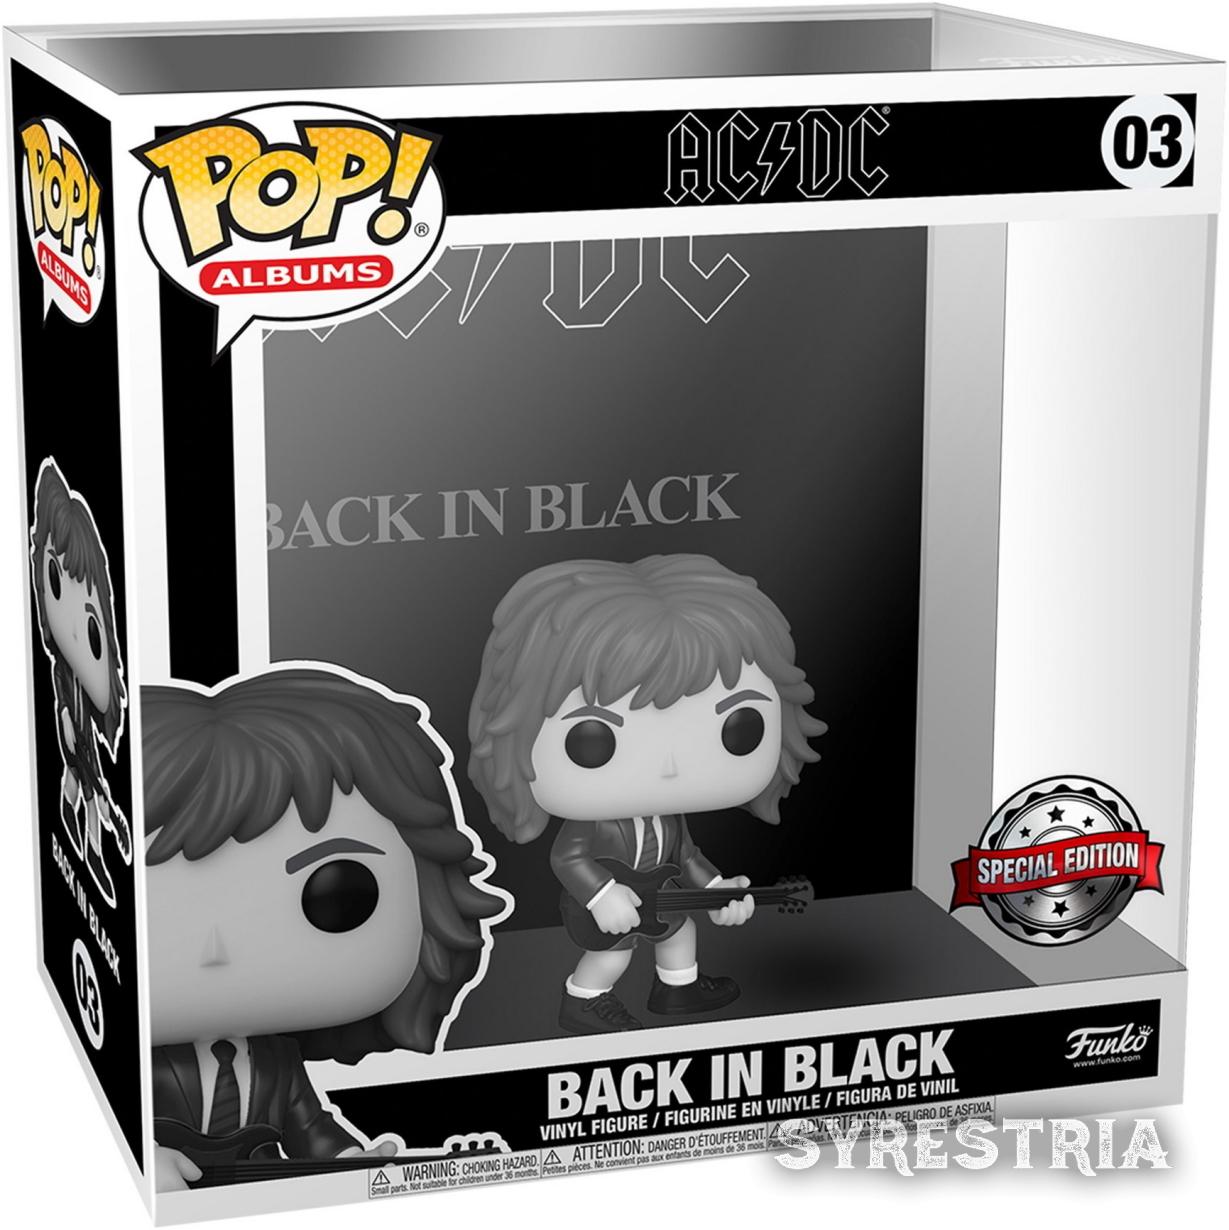 AC/DC - Back in Black 03 Special Edition - Funko Pop! Albums - Vinyl Figur